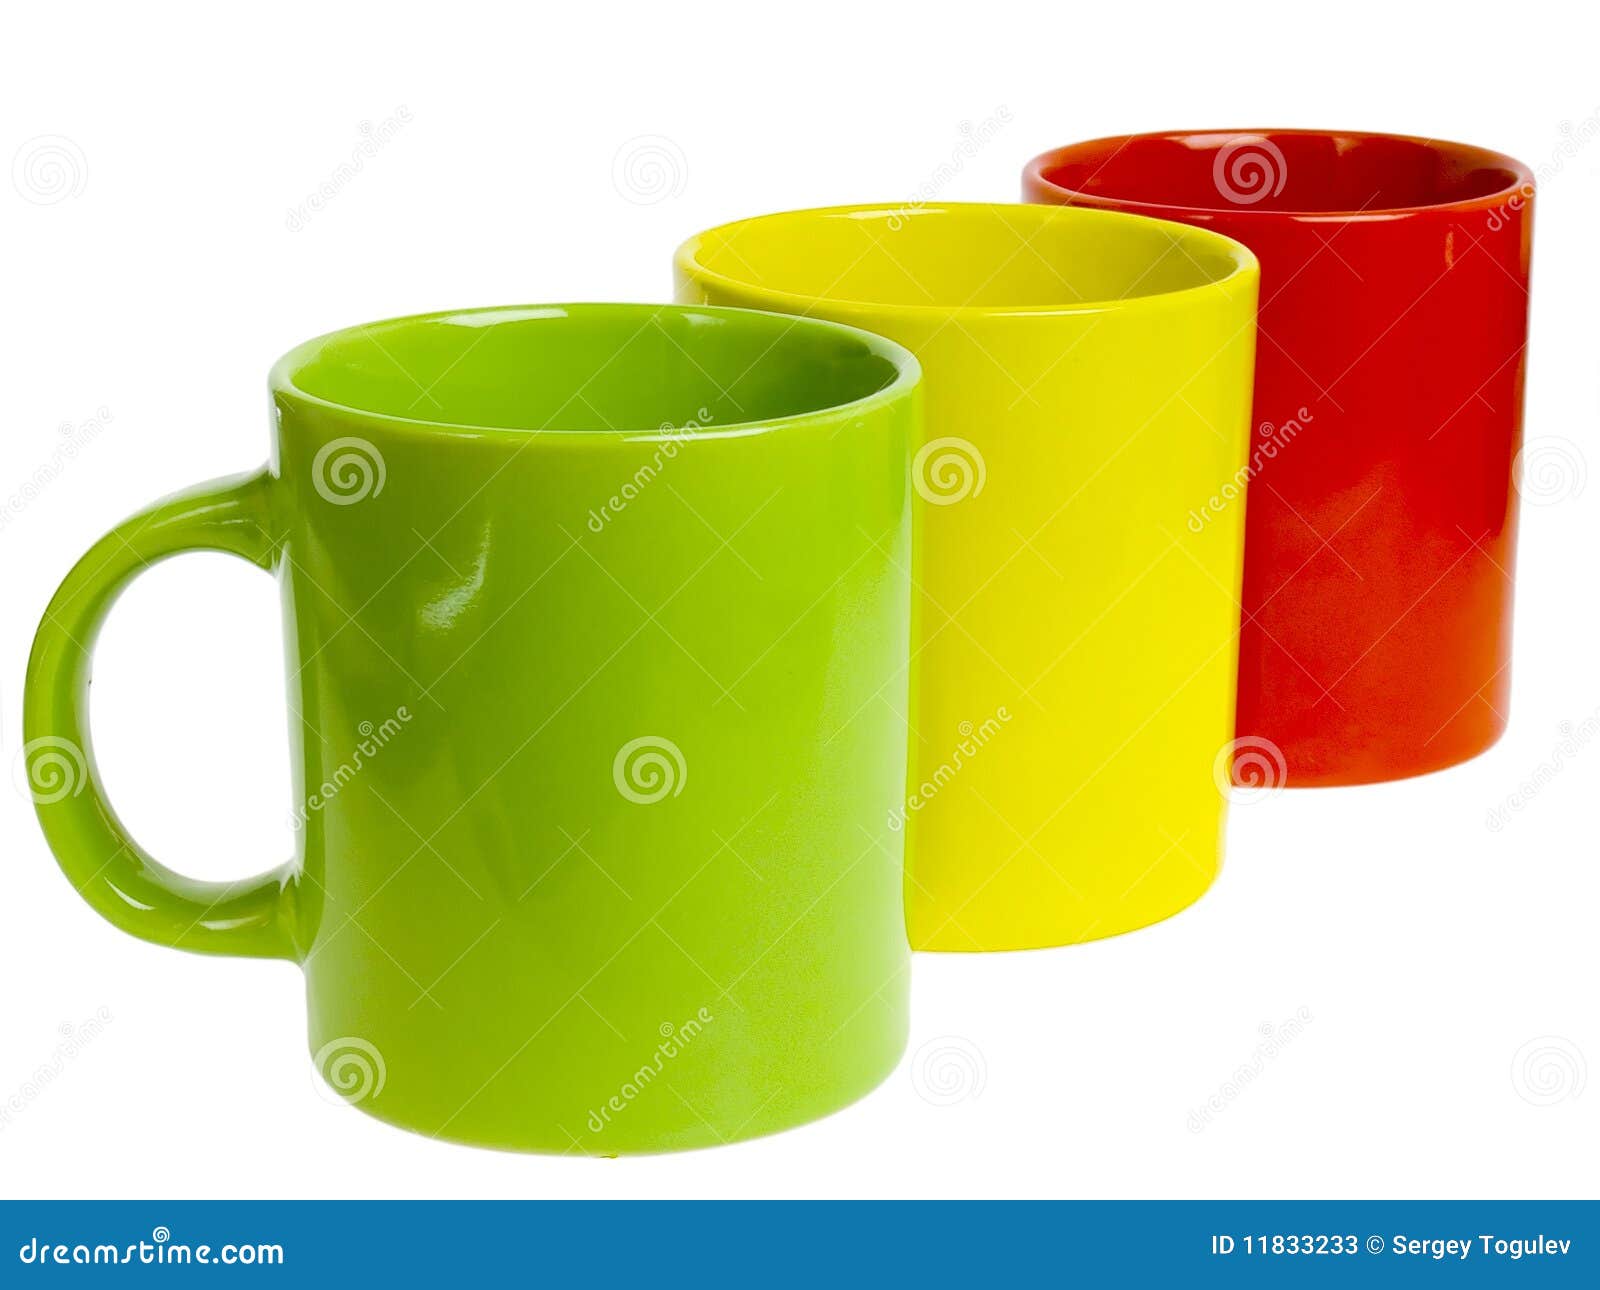 https://thumbs.dreamstime.com/z/three-tea-cups-red-yellow-green-11833233.jpg